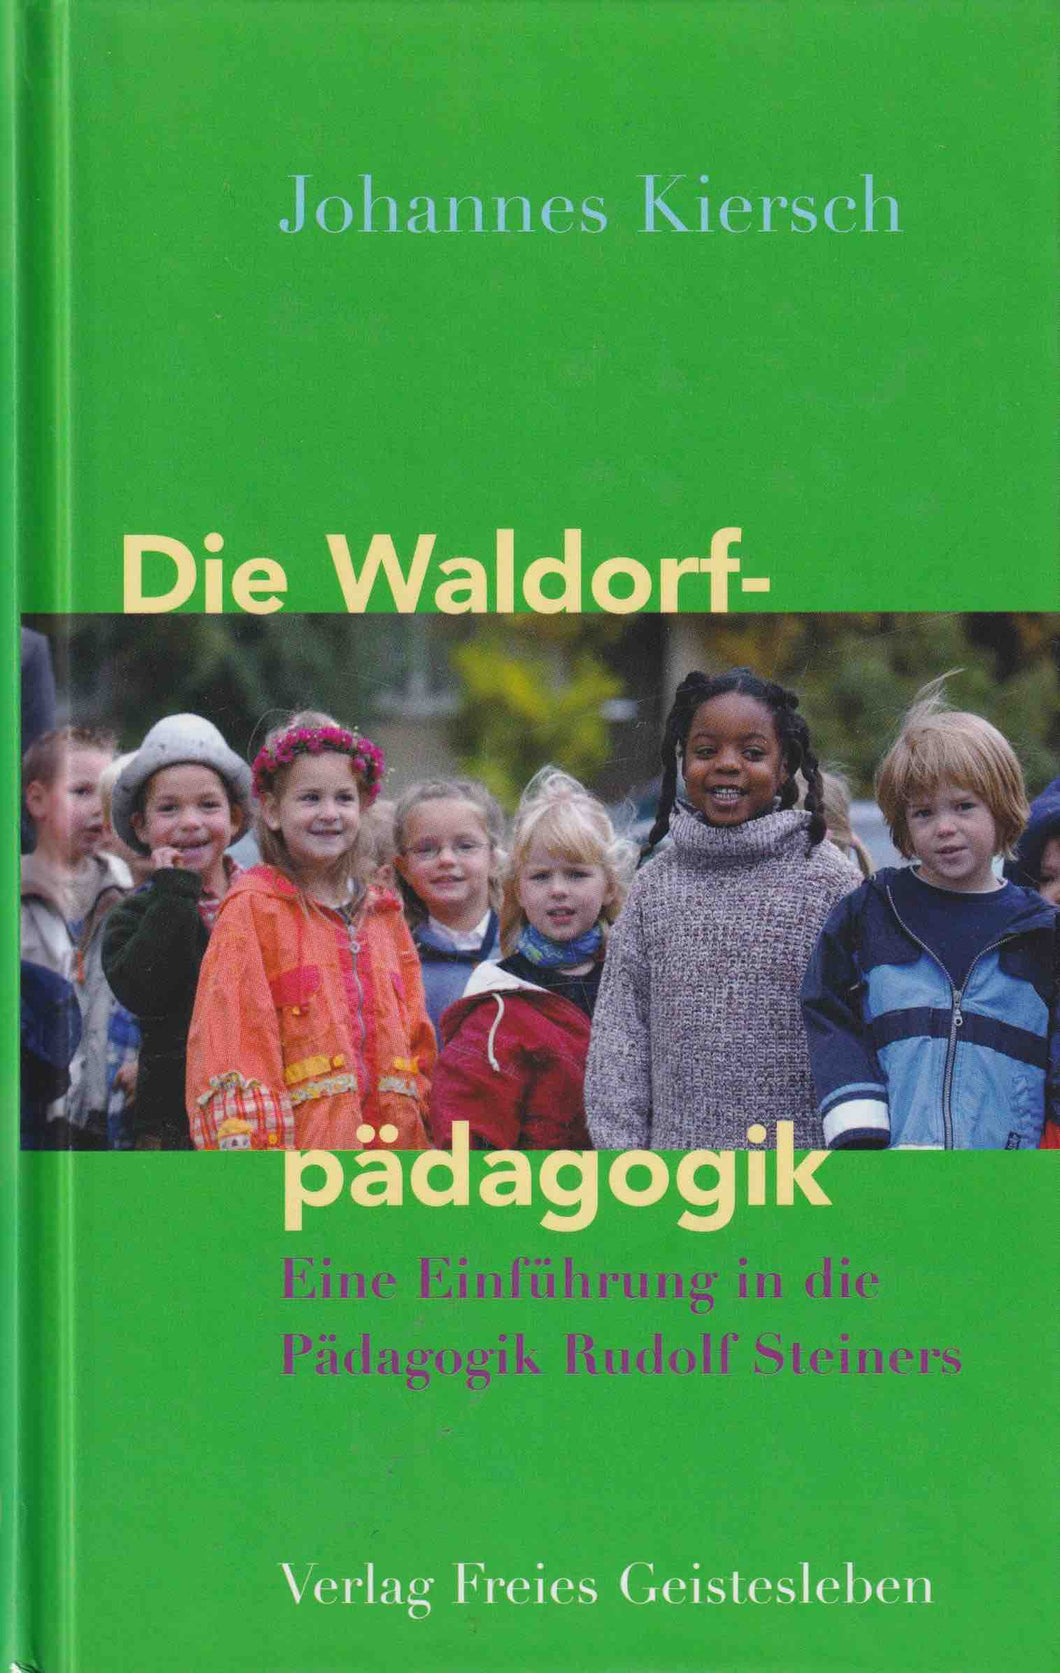 Die Waldorfpädagogik